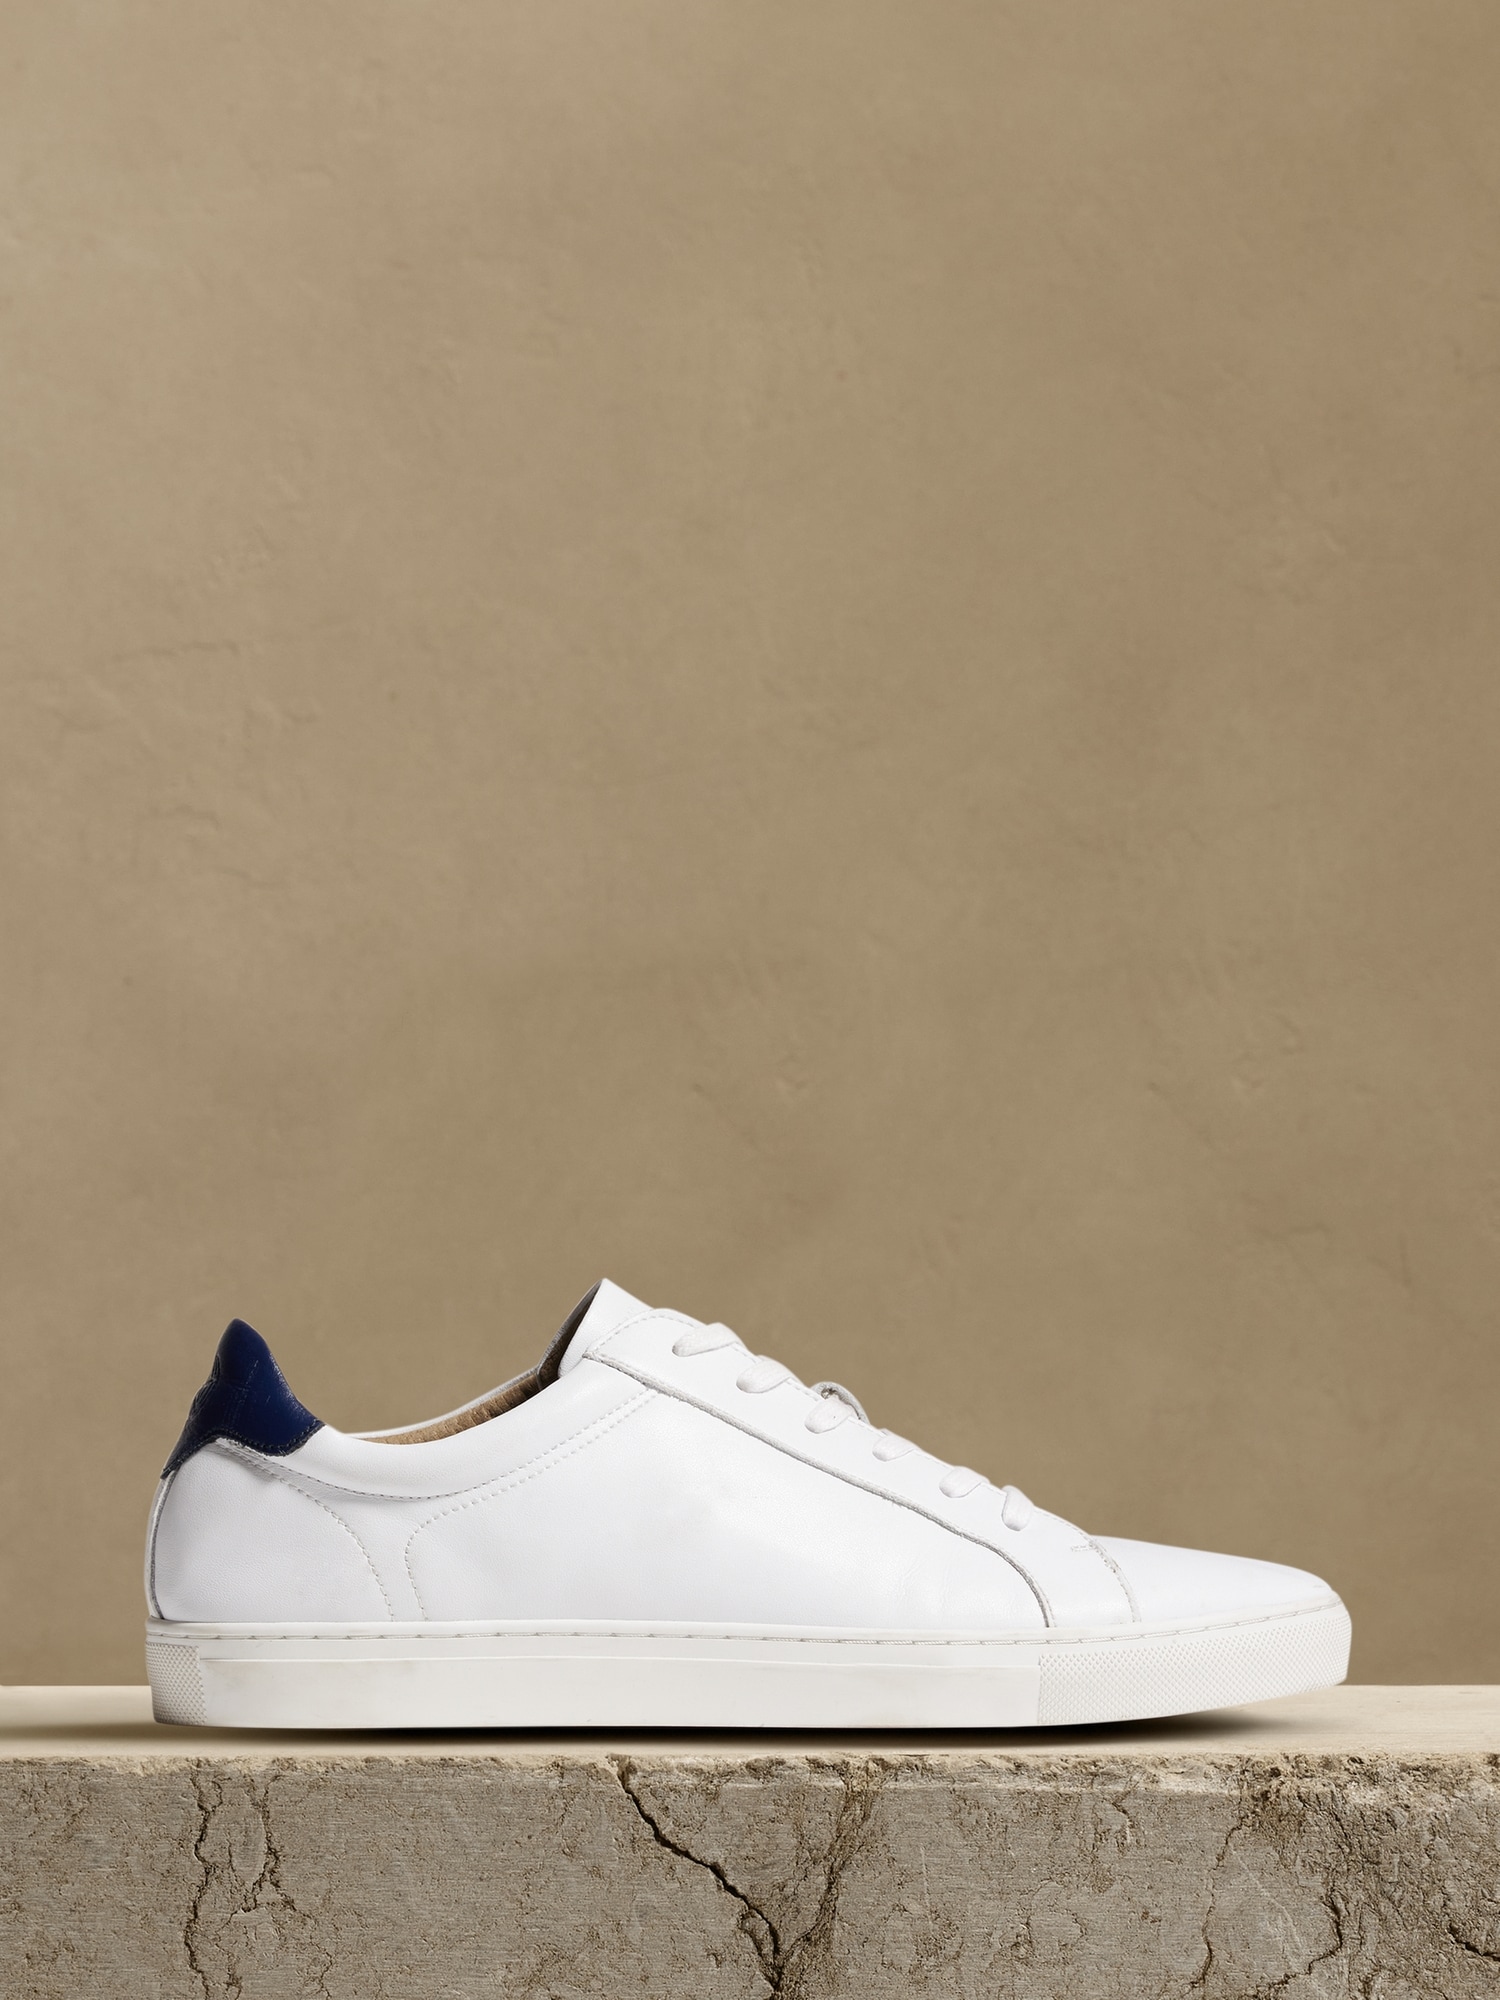 Banana Republic Nicklas Leather Sneaker white - 166850012